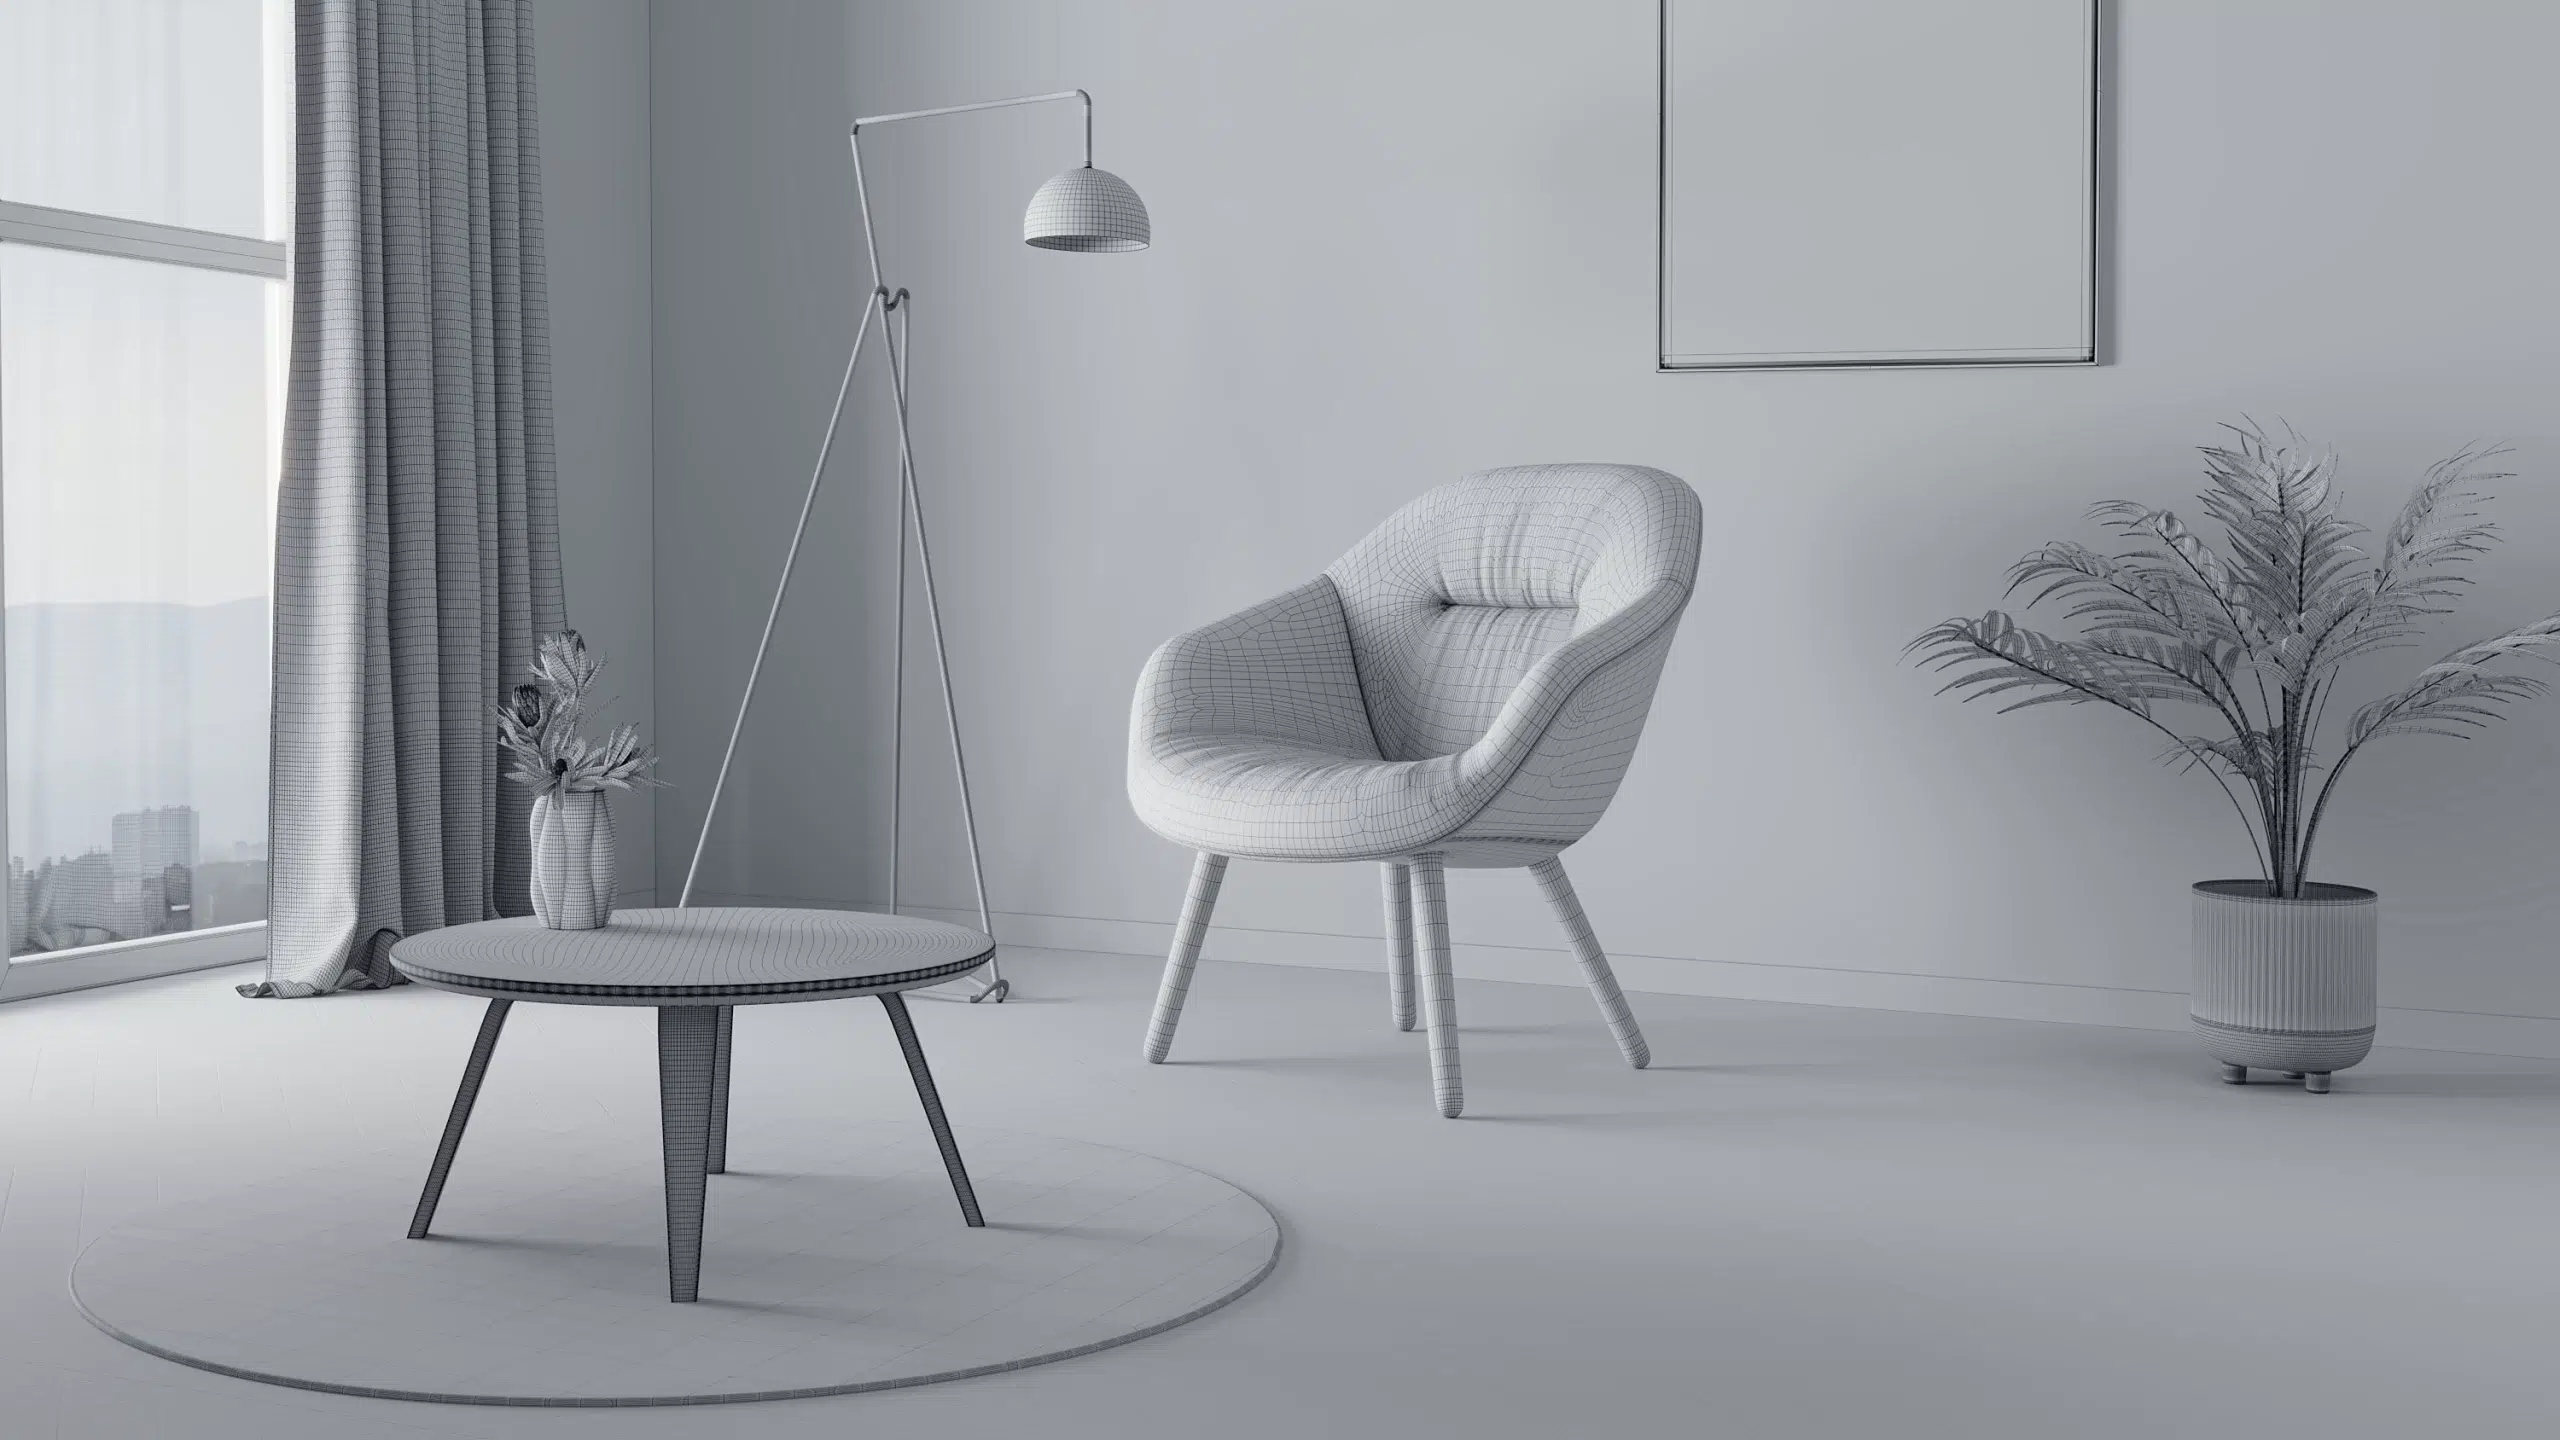 Wireframe Furniture elegance Design by CG Viz Studio